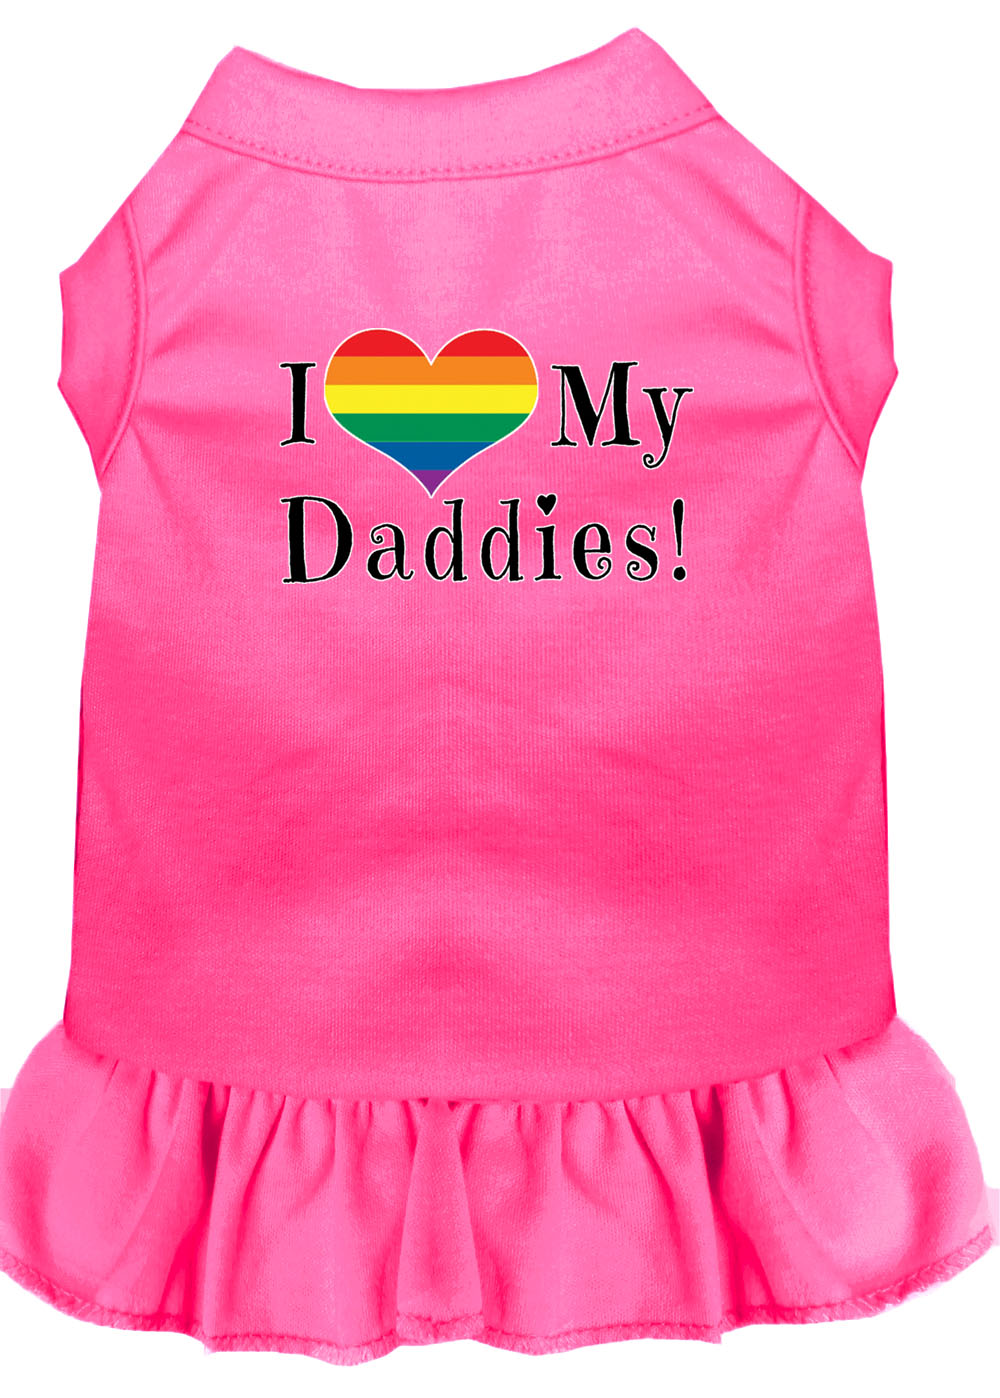 I Heart my Daddies Screen Print Dog Dress Bright Pink XS